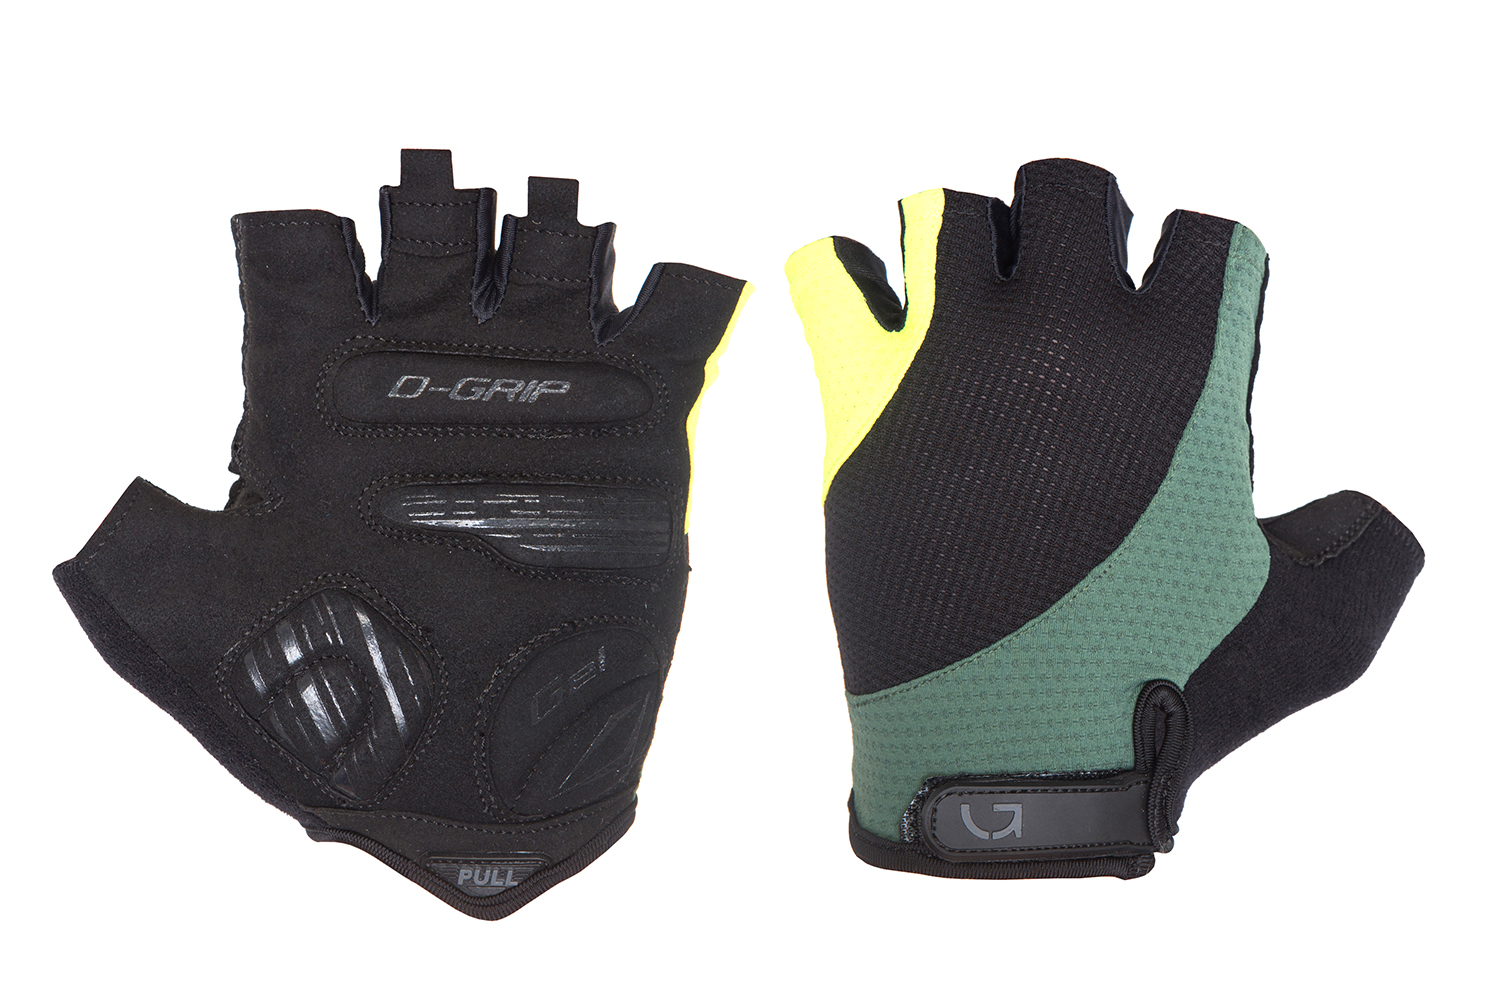 Перчатки Green Cycle Pillow без пальцев XL черный/зеленый/желтый